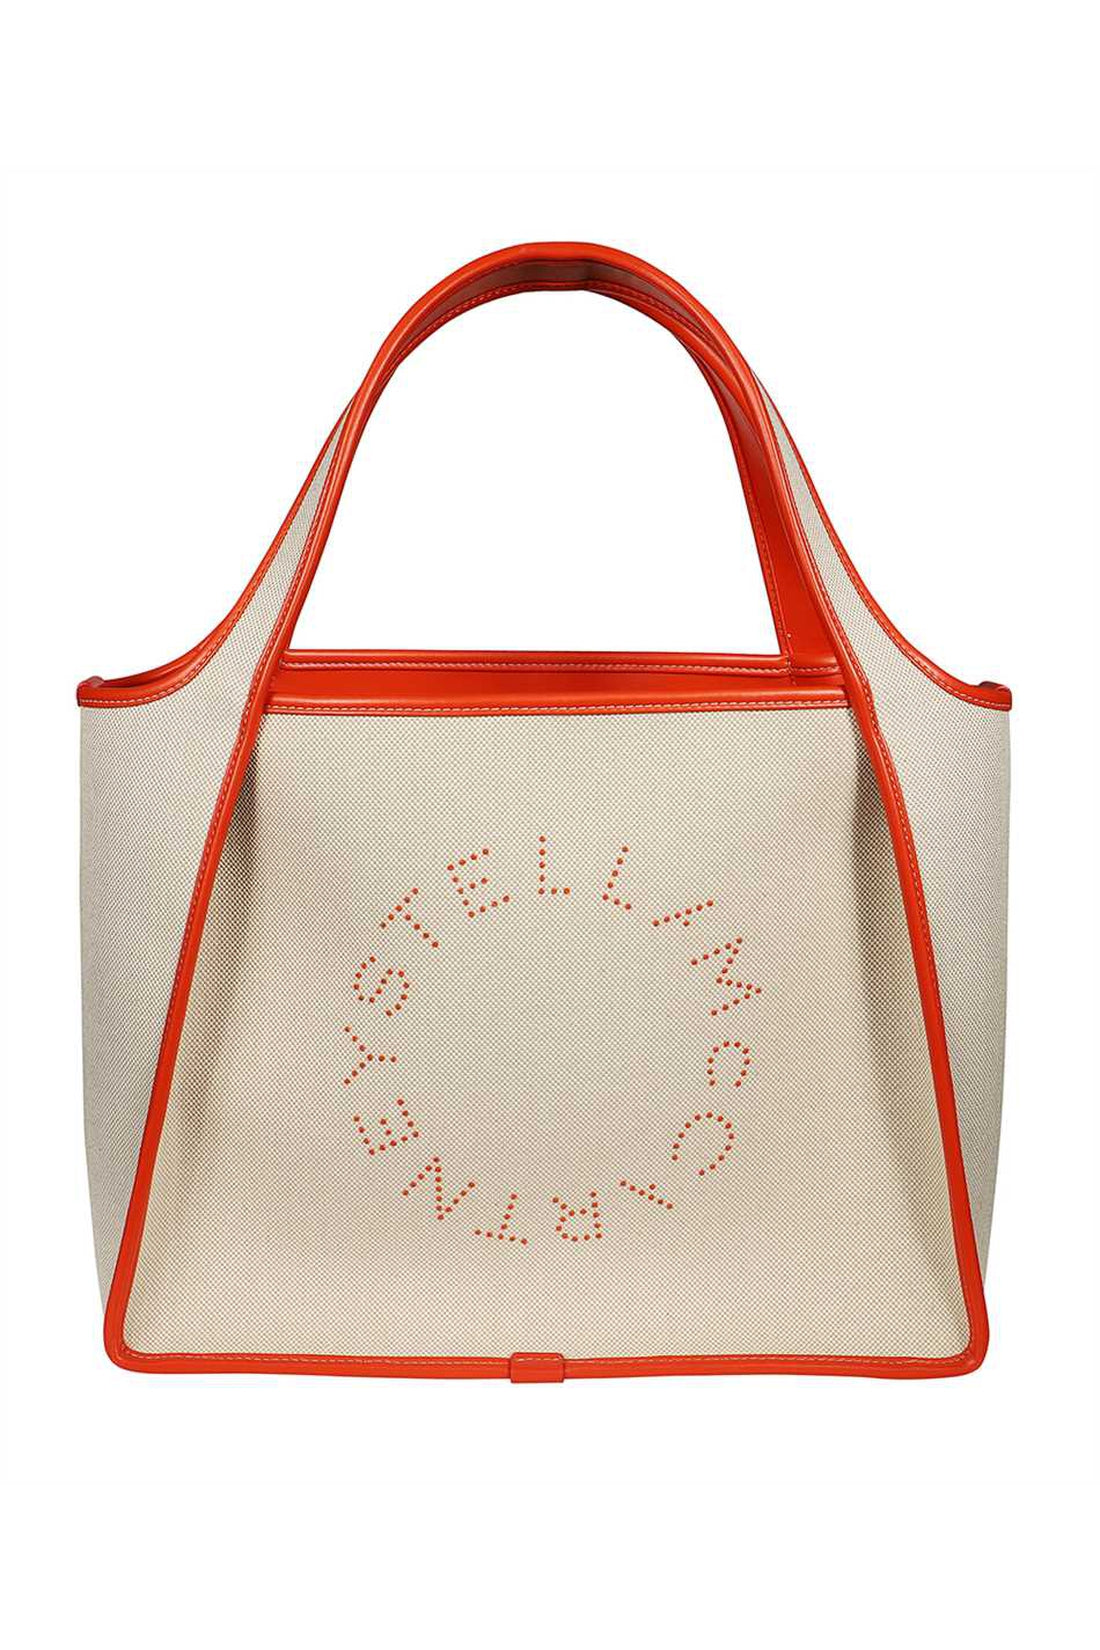 Stella McCartney-OUTLET-SALE-Logo detail tote bag-ARCHIVIST